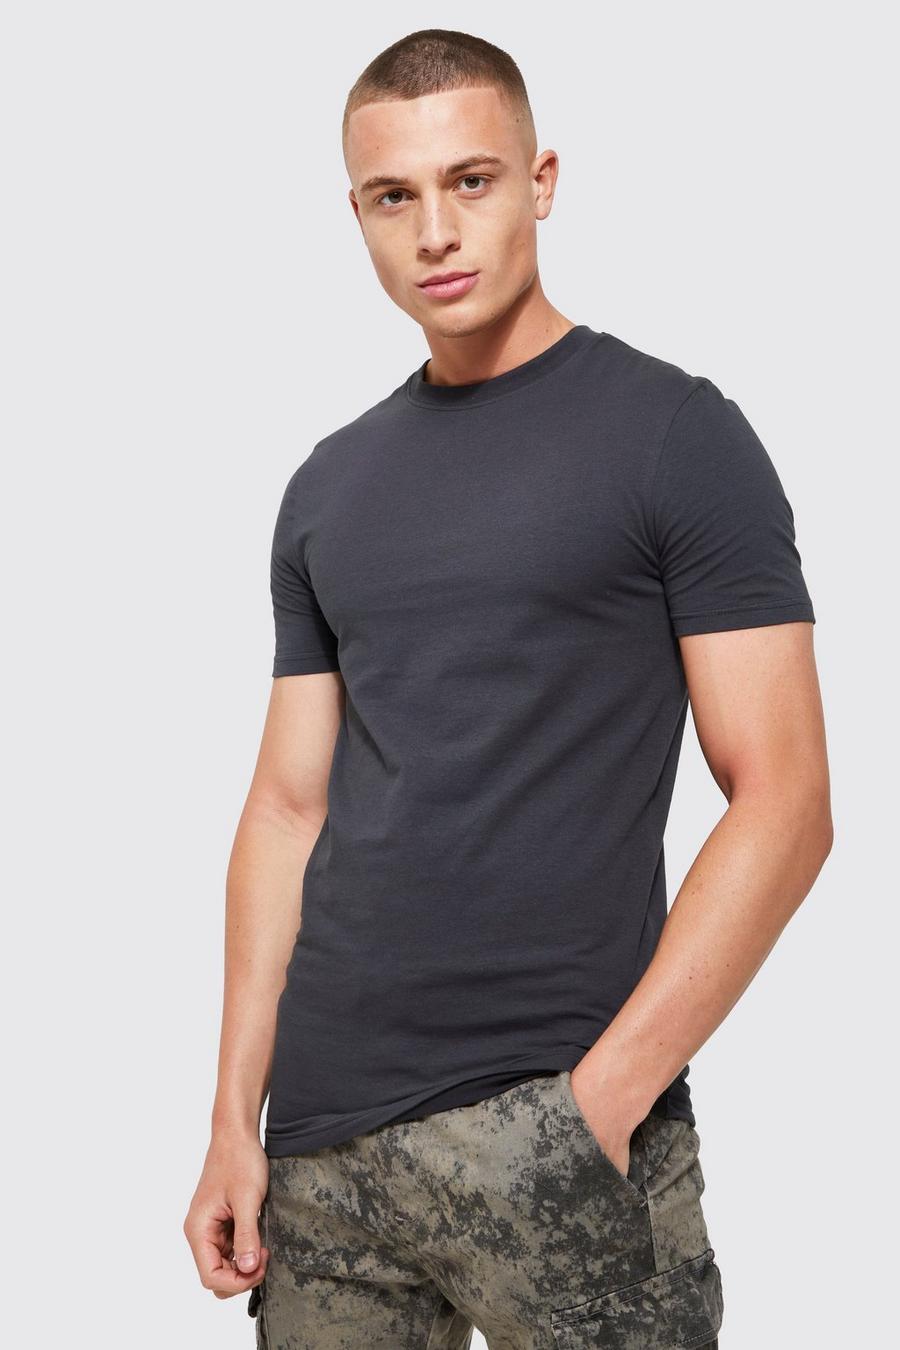 Charcoal gris Longline Muscle Fit T-Shirt